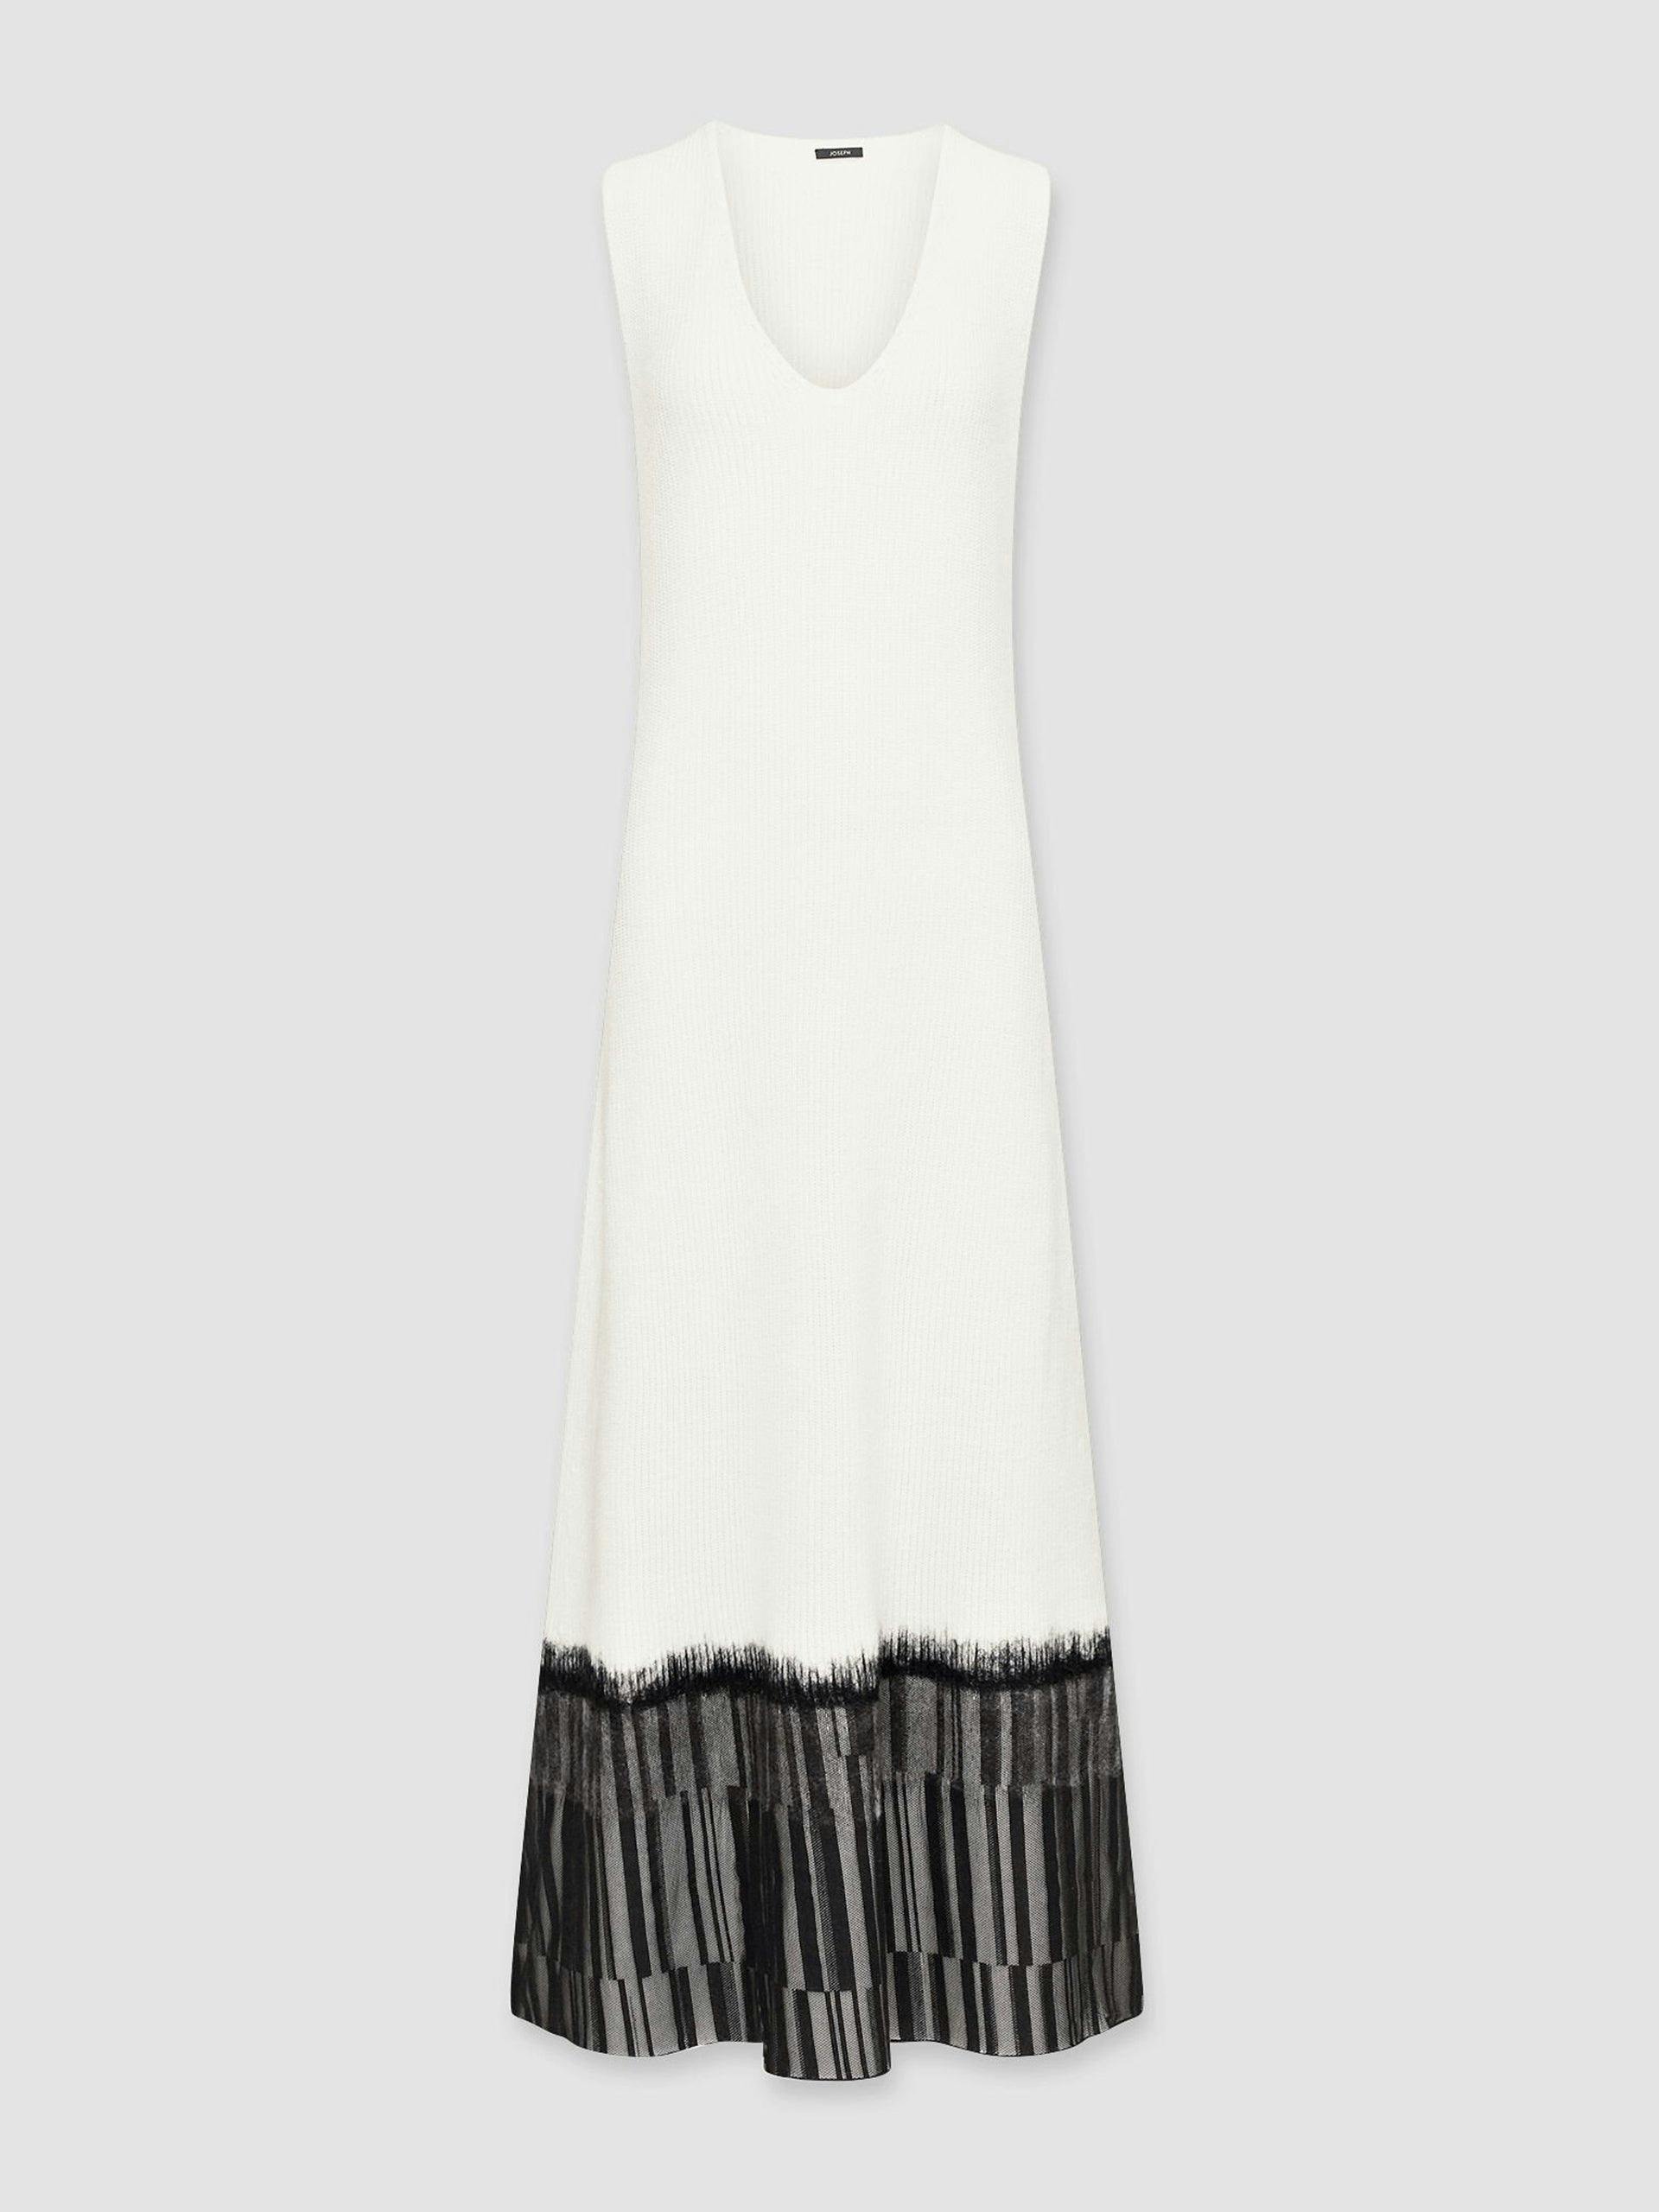 Ivory knit and lace dress